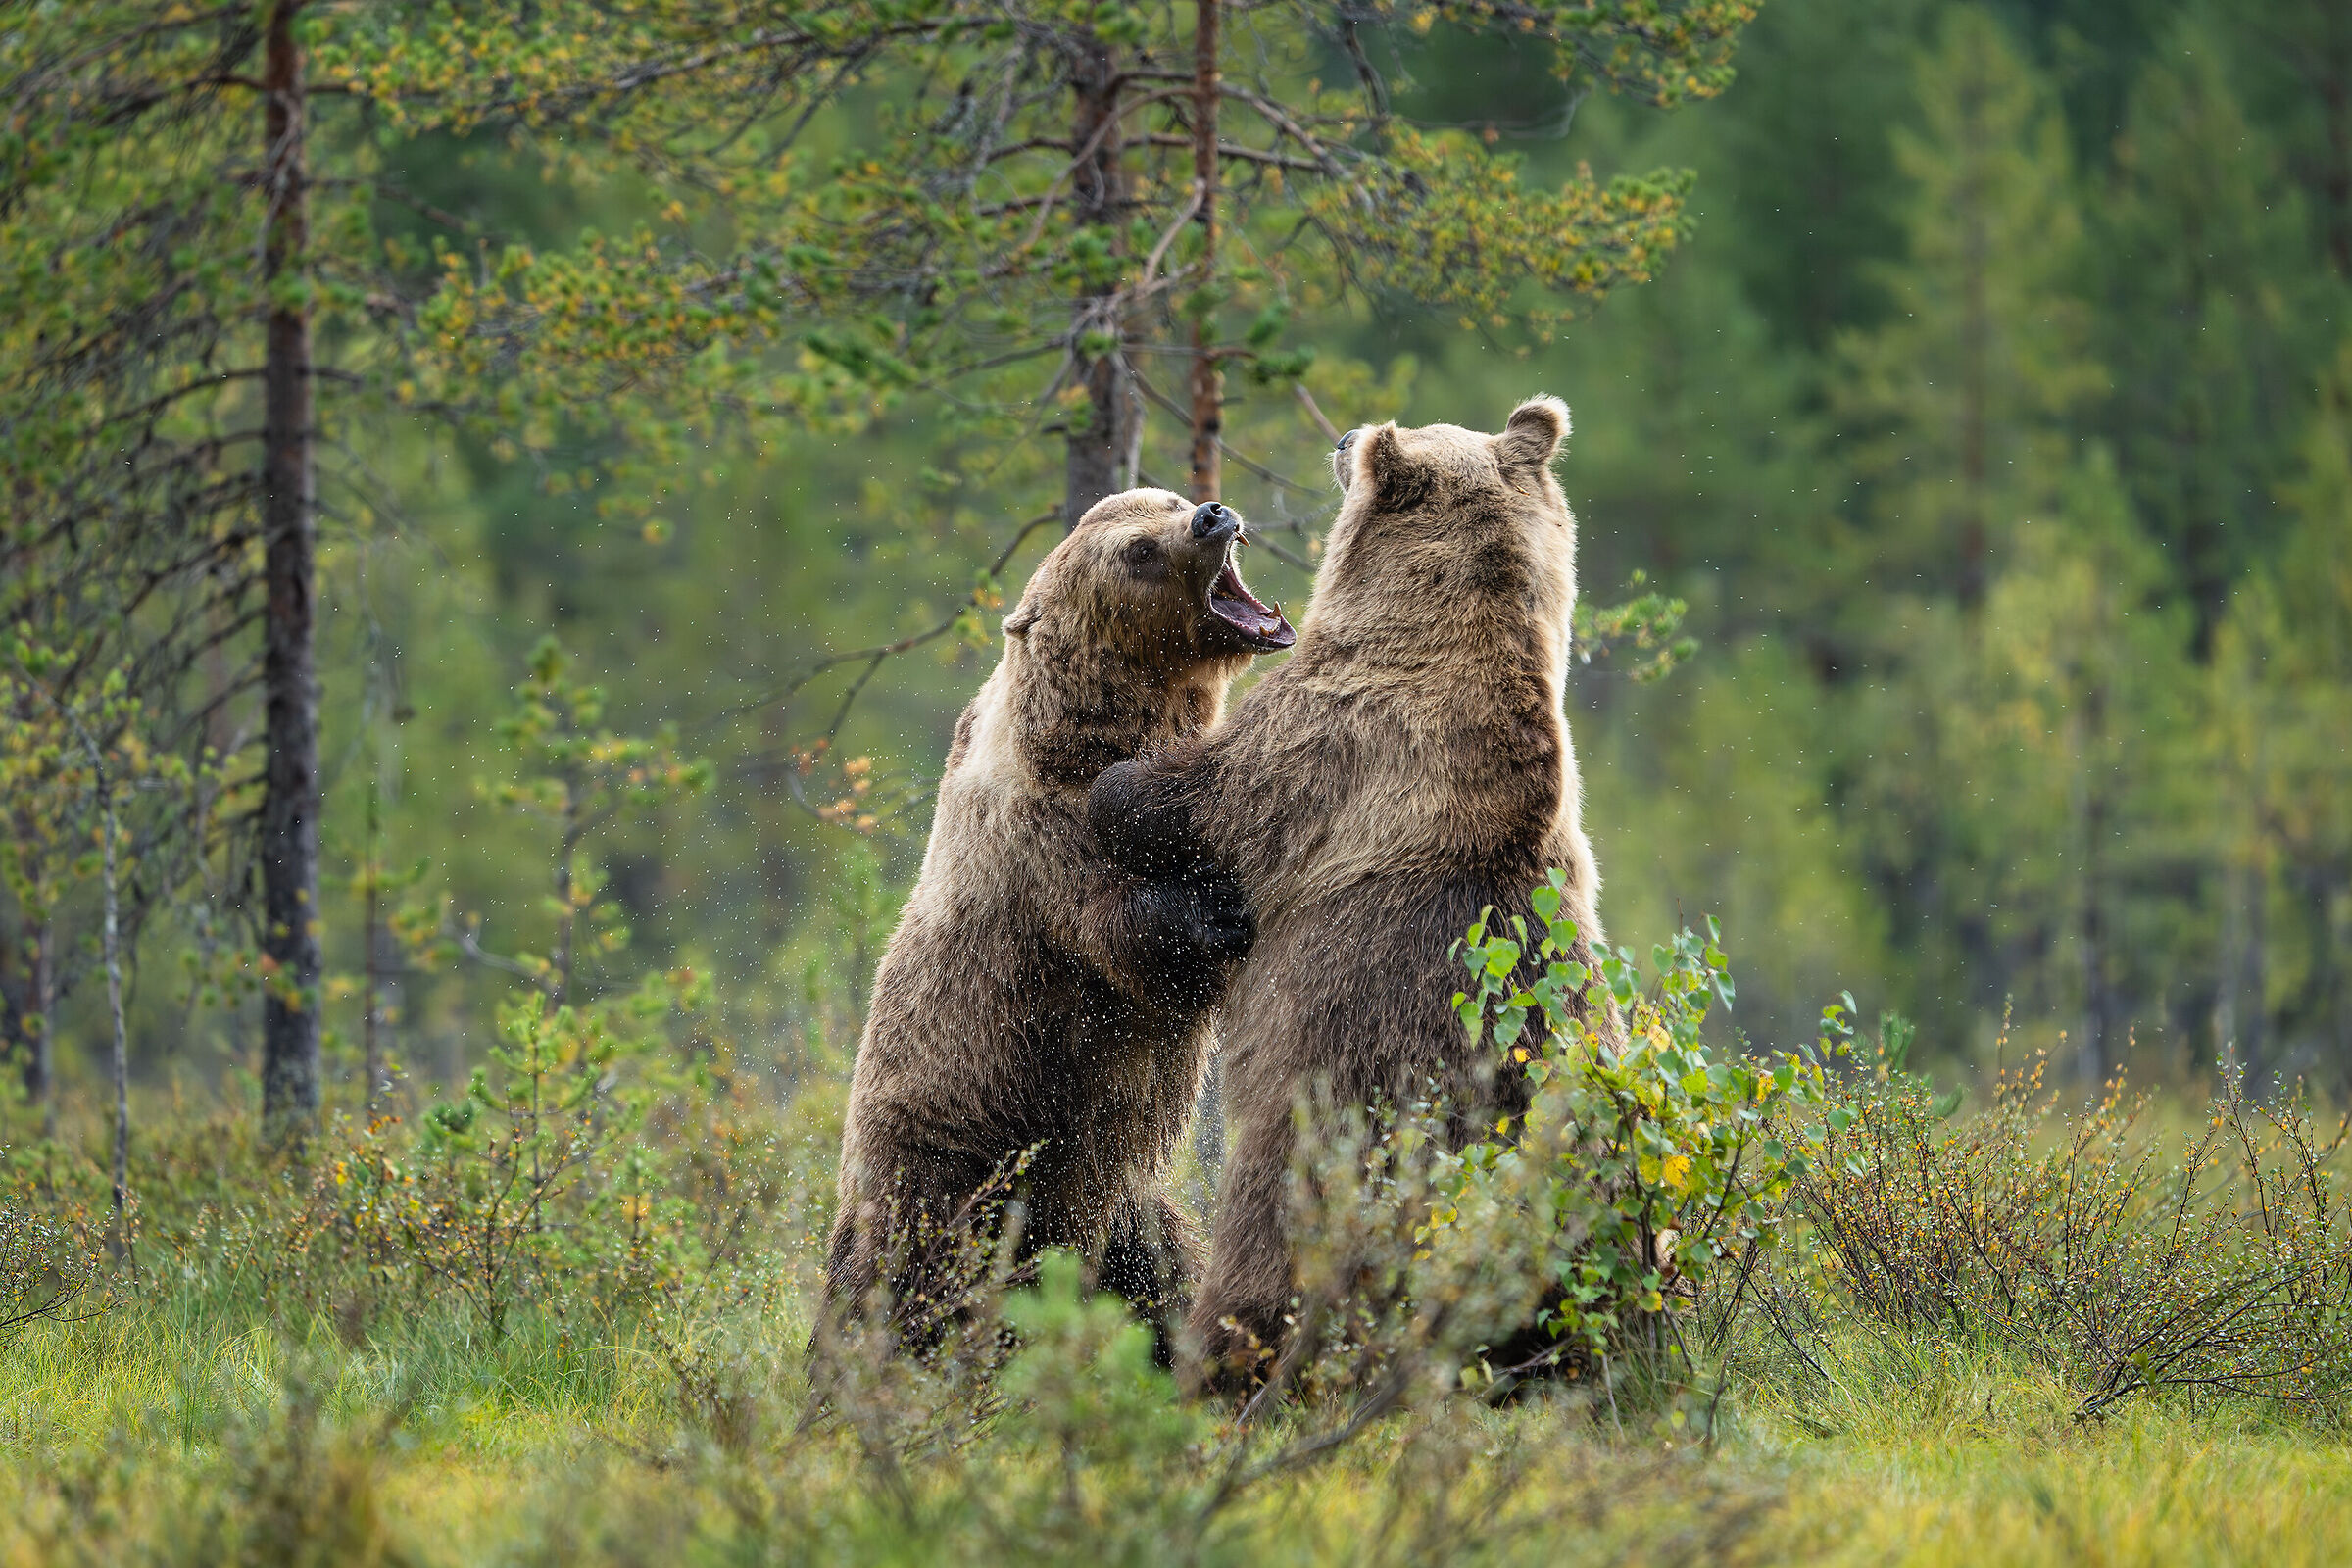 Bear' fight...